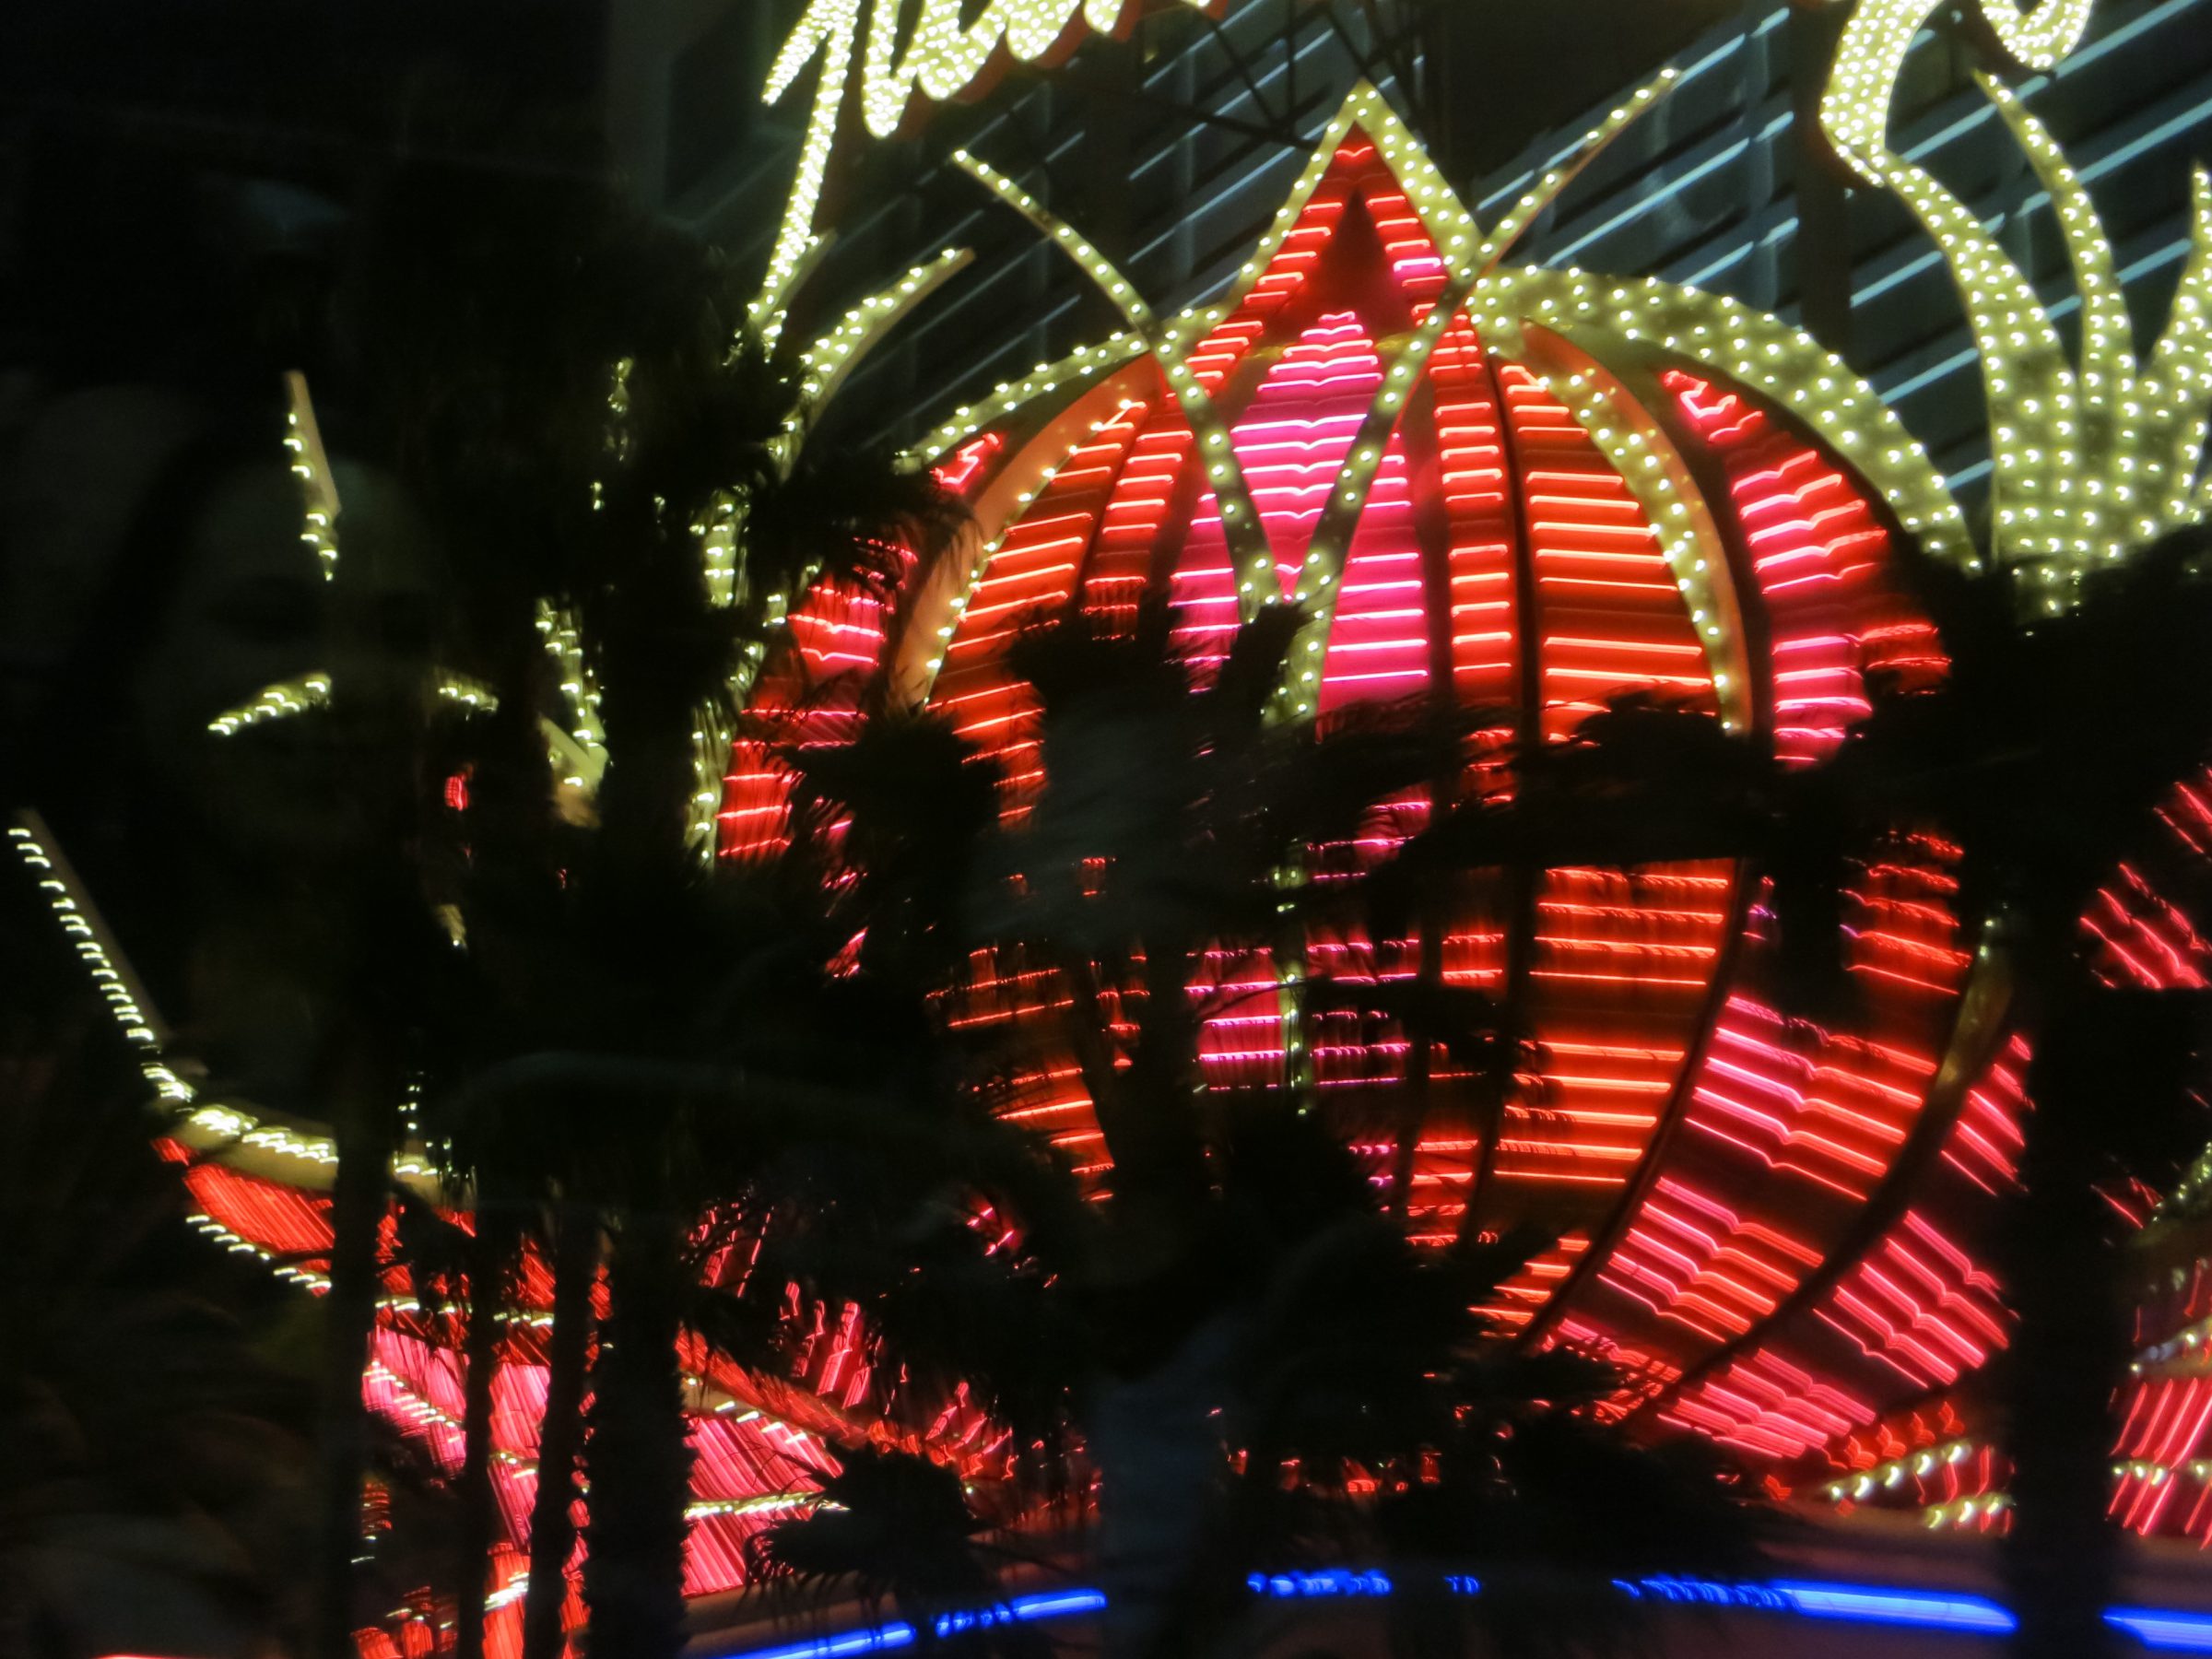 Las Vegas Flamingo Hotel sign at night